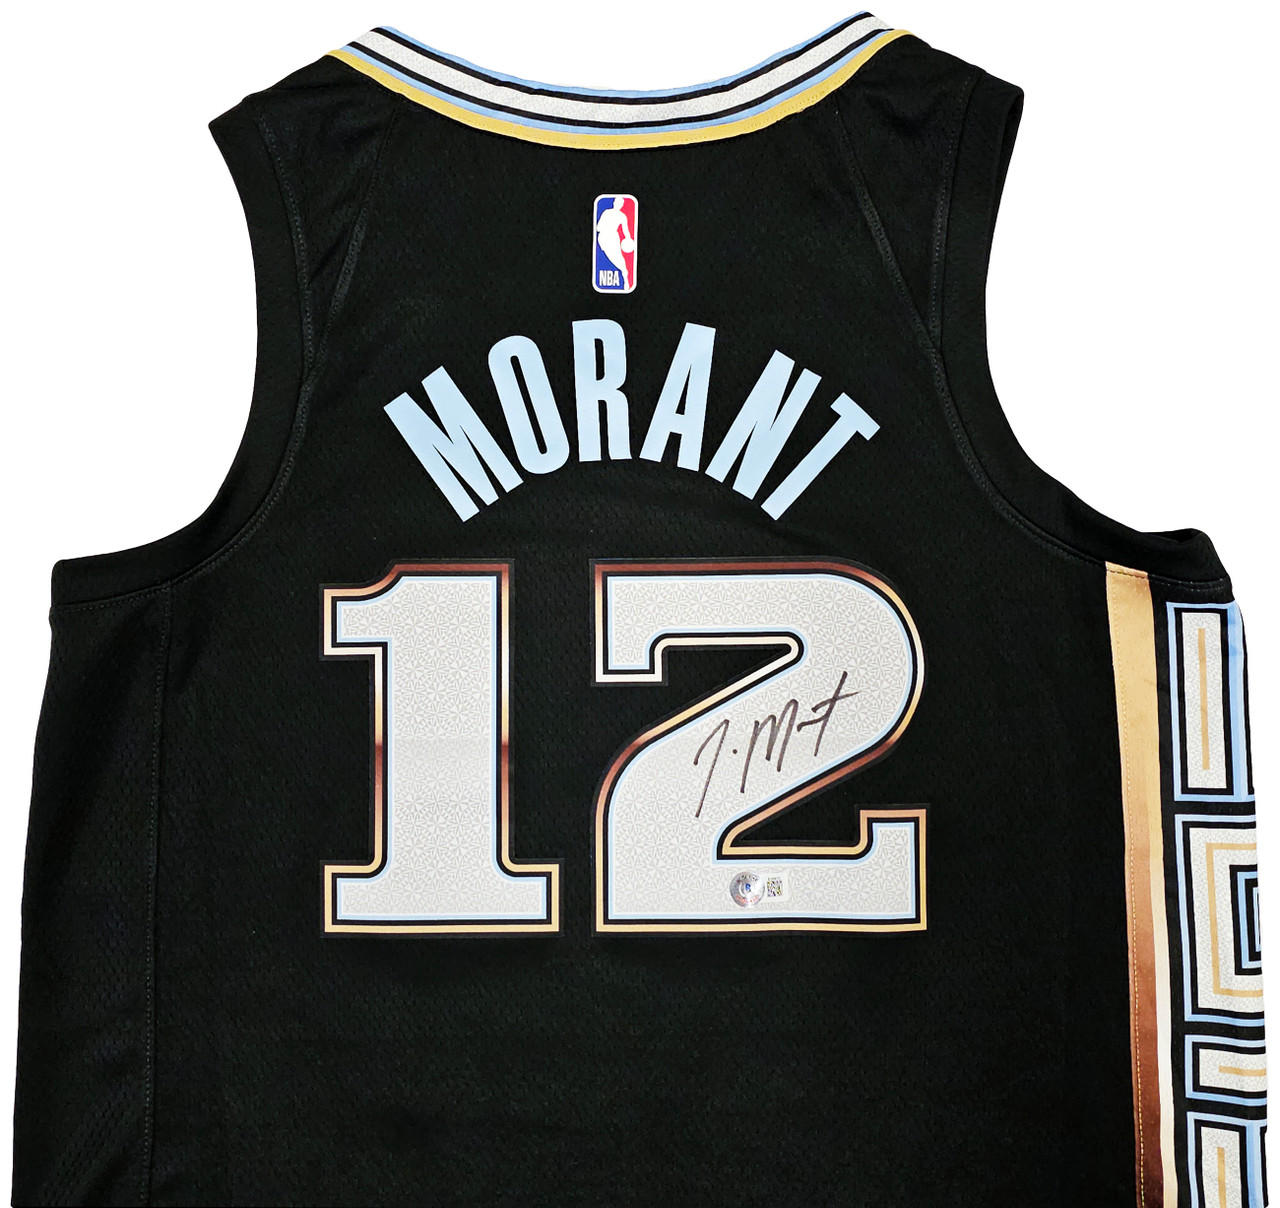 NBA Grizzlies 12 Ja Morant Black Gold Nike Men Jersey